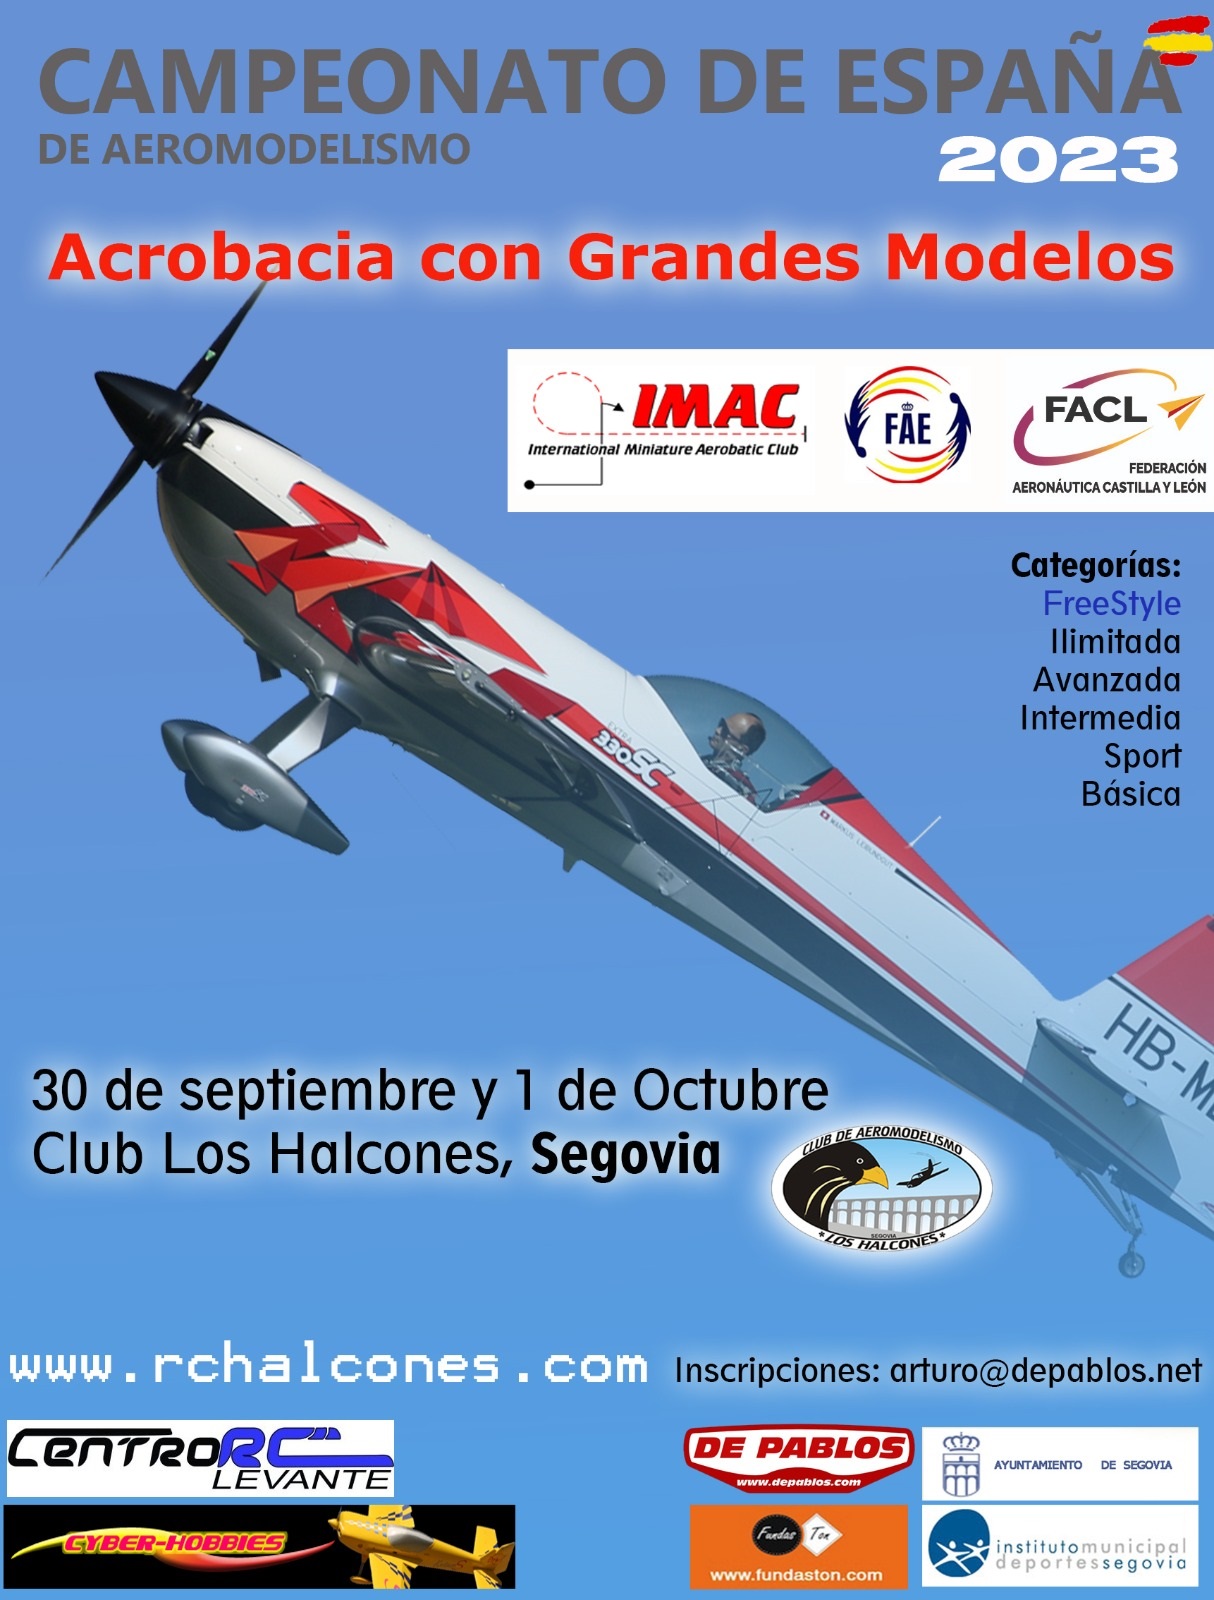 Campeonato de España de Aeromodelismo 2023: Acrobacia Grandes Maquetas